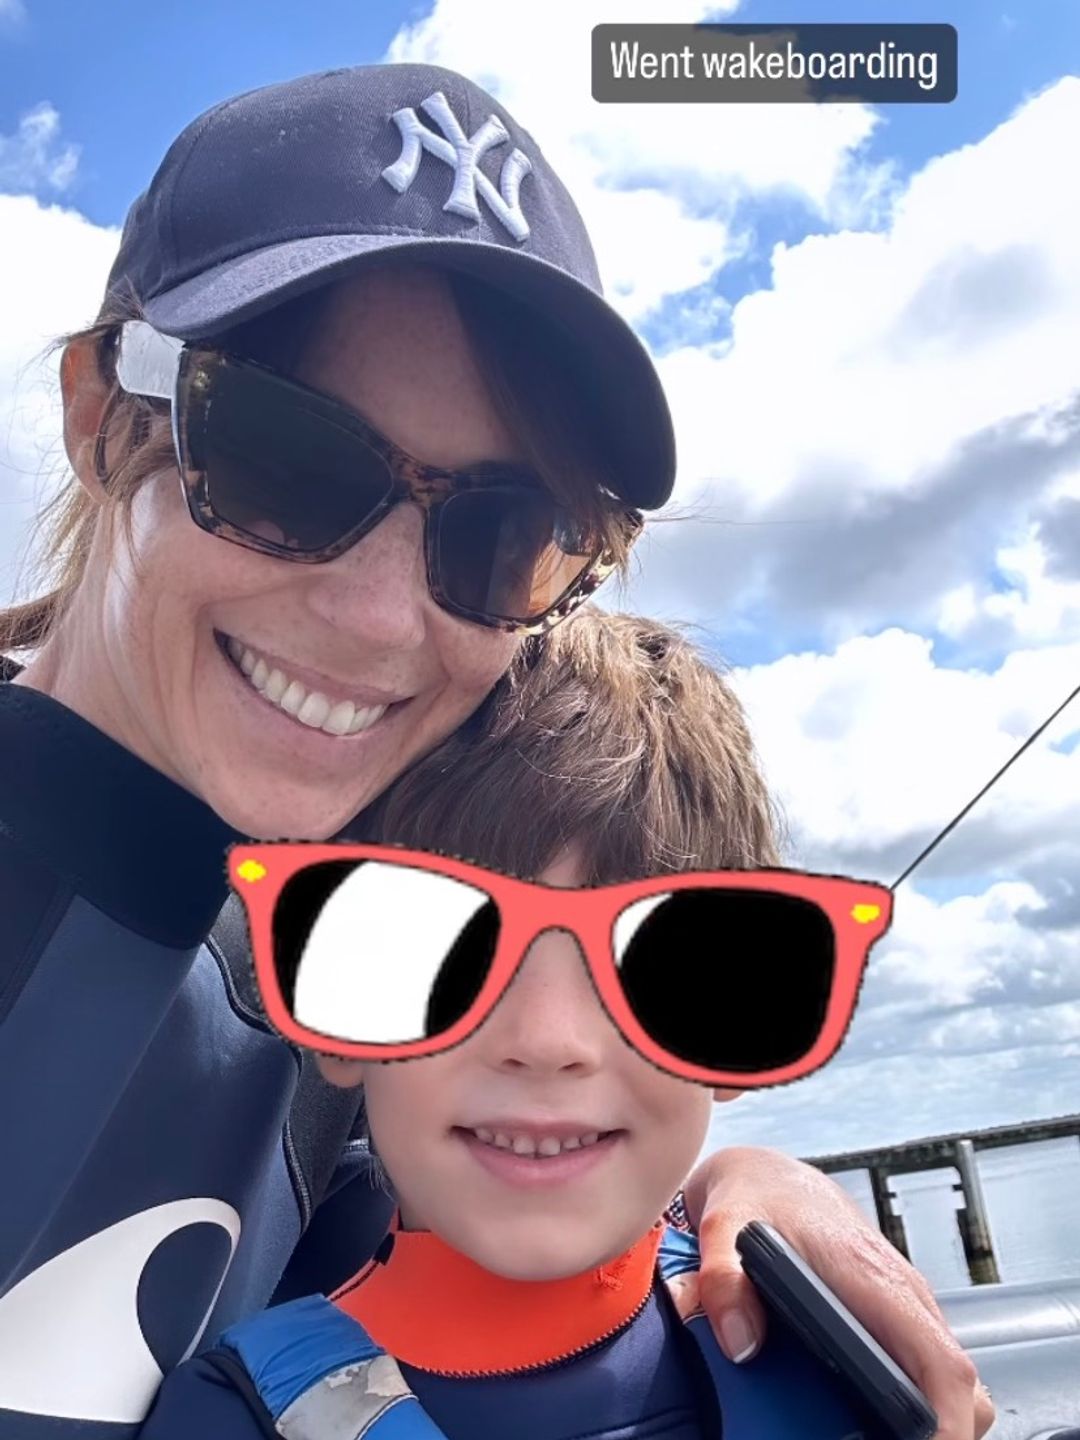 Alex Jones went wakeboarding with her son